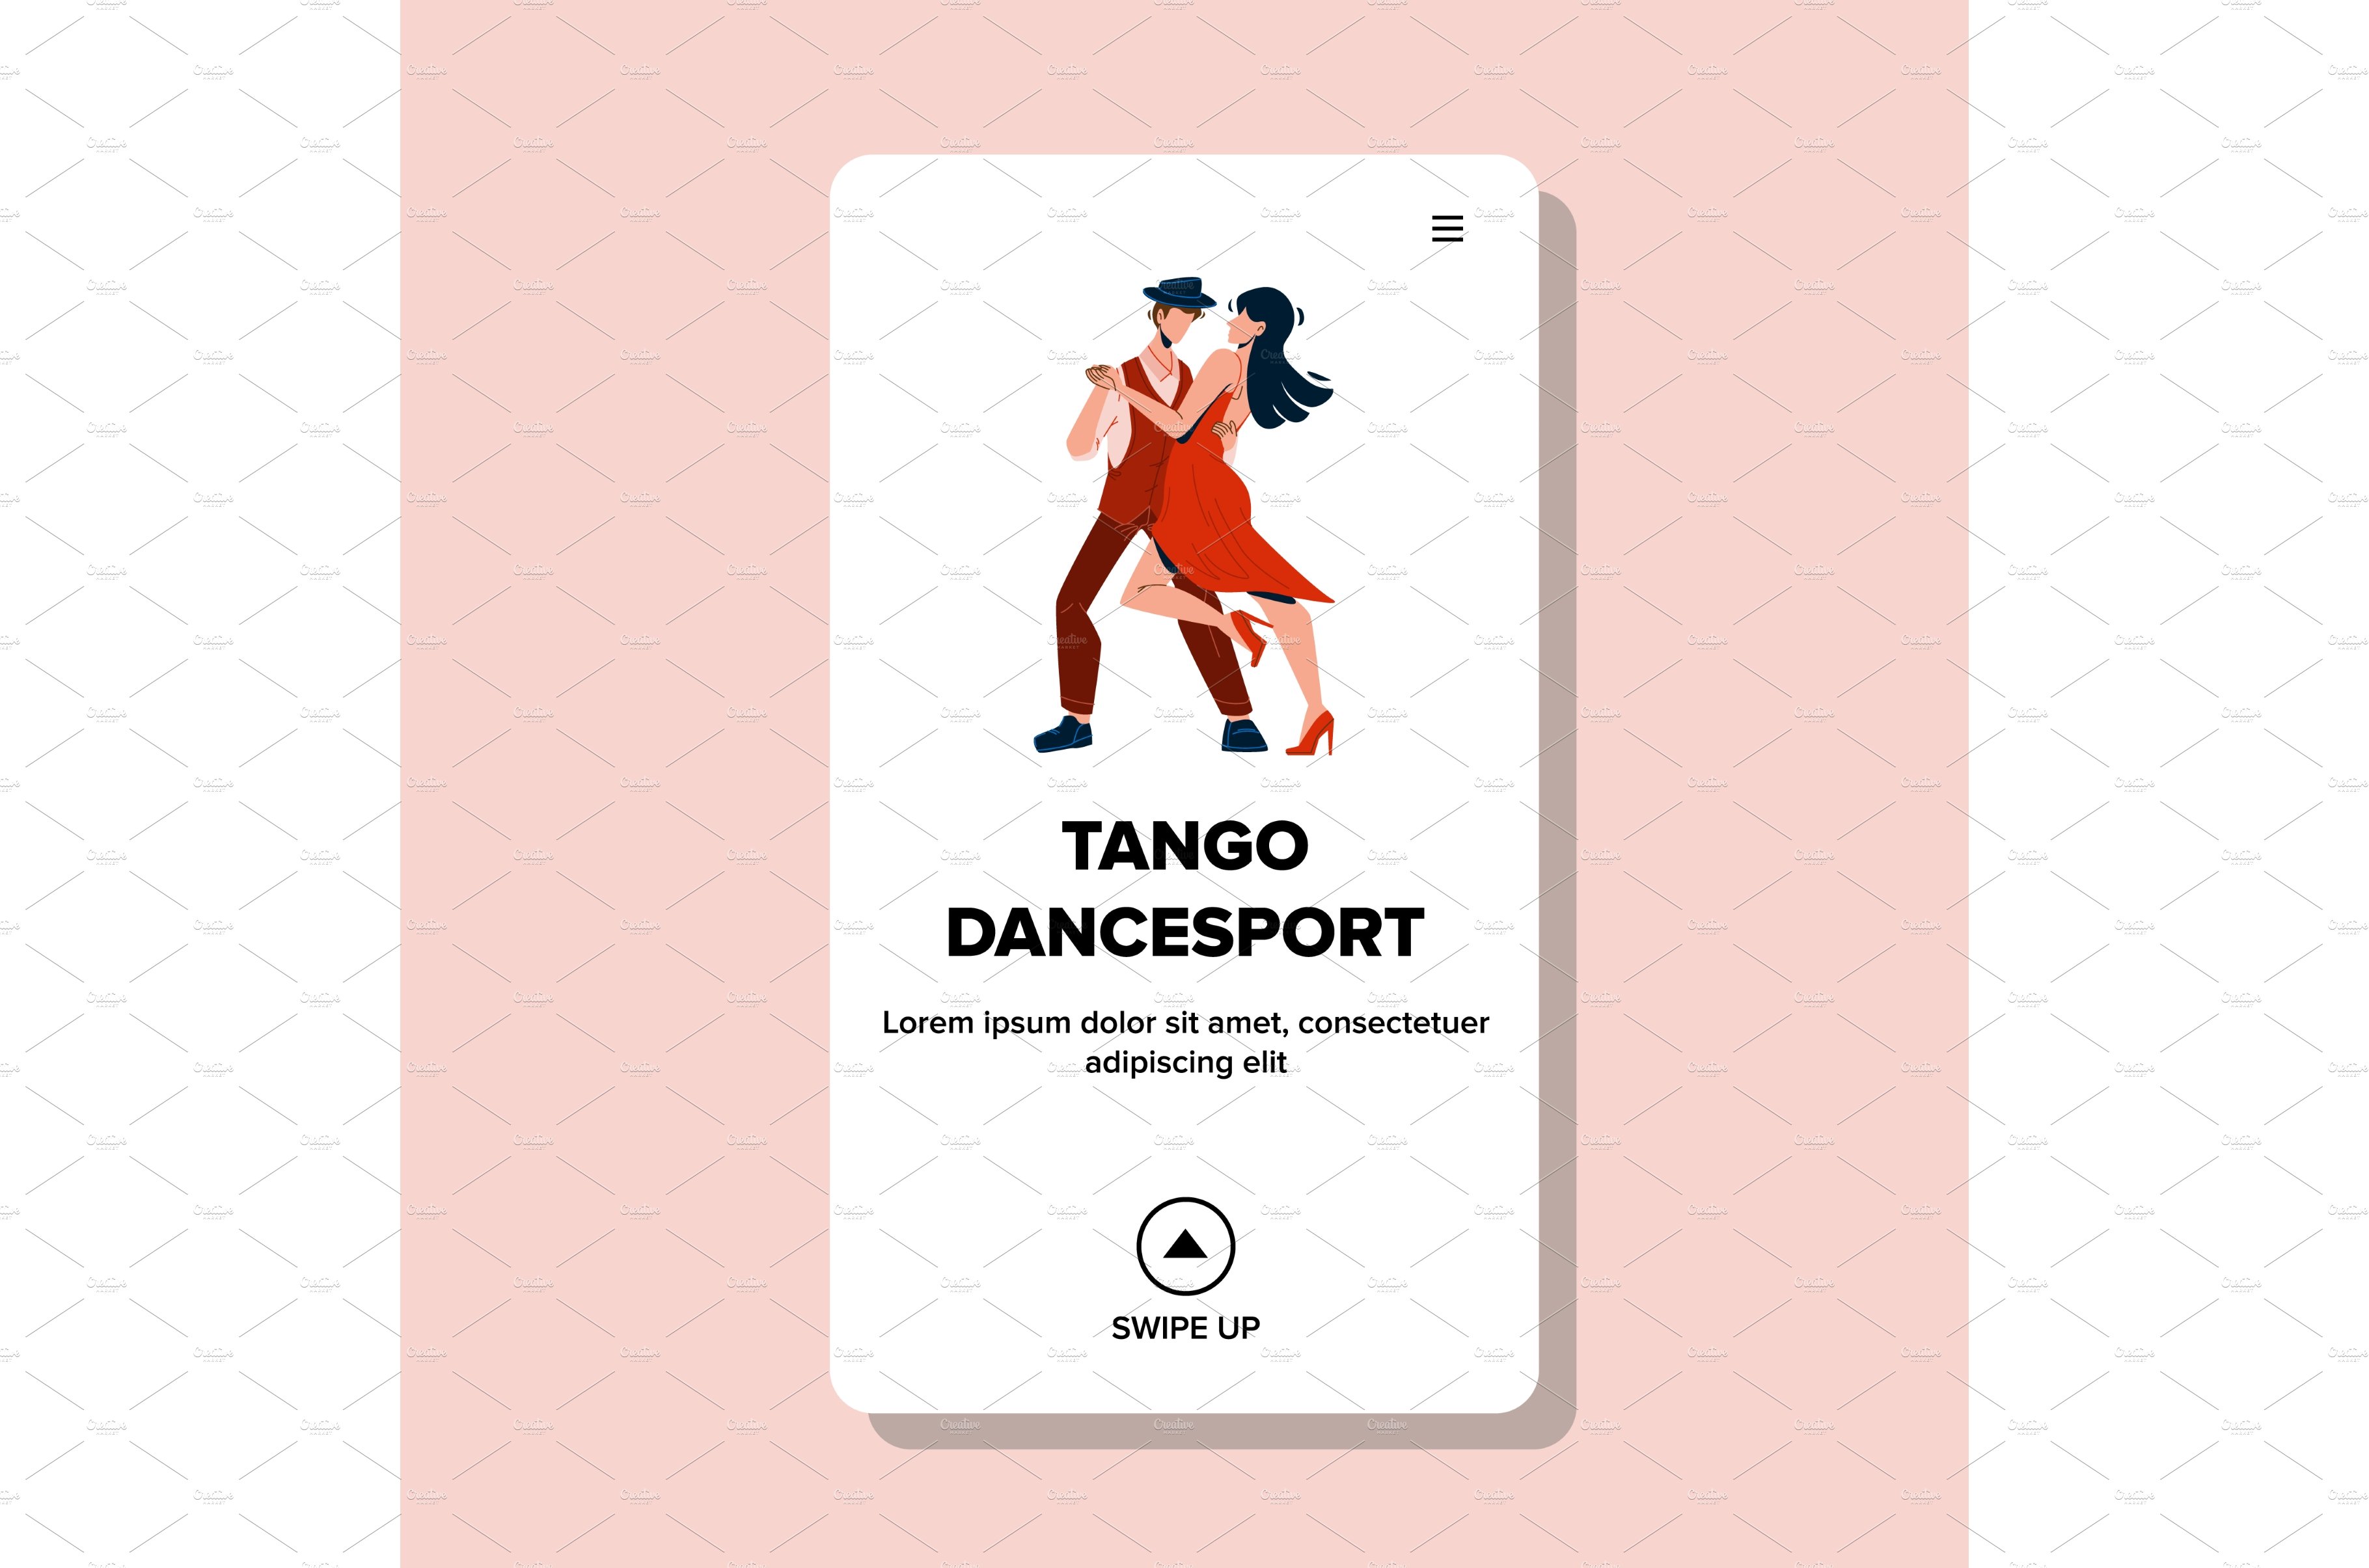 Tango Dancesport Sport Competition cover image.